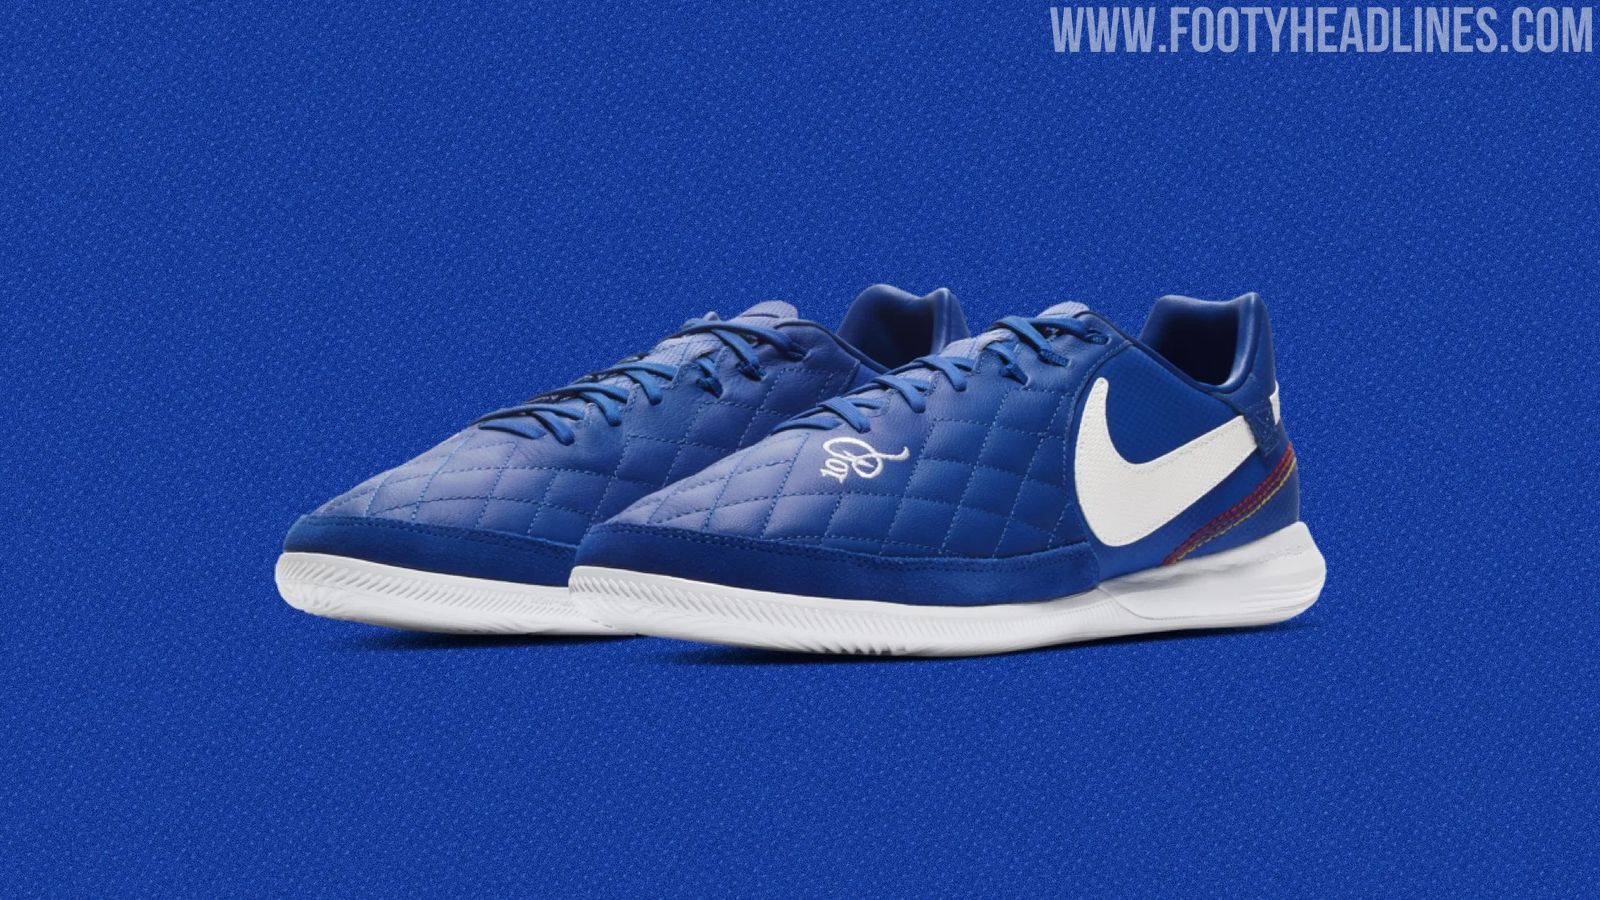 paso Desanimarse Química Blue Brazil-Inspired Nike Tiempo Ronaldinho 2019 Indoor Boots Released -  Footy Headlines